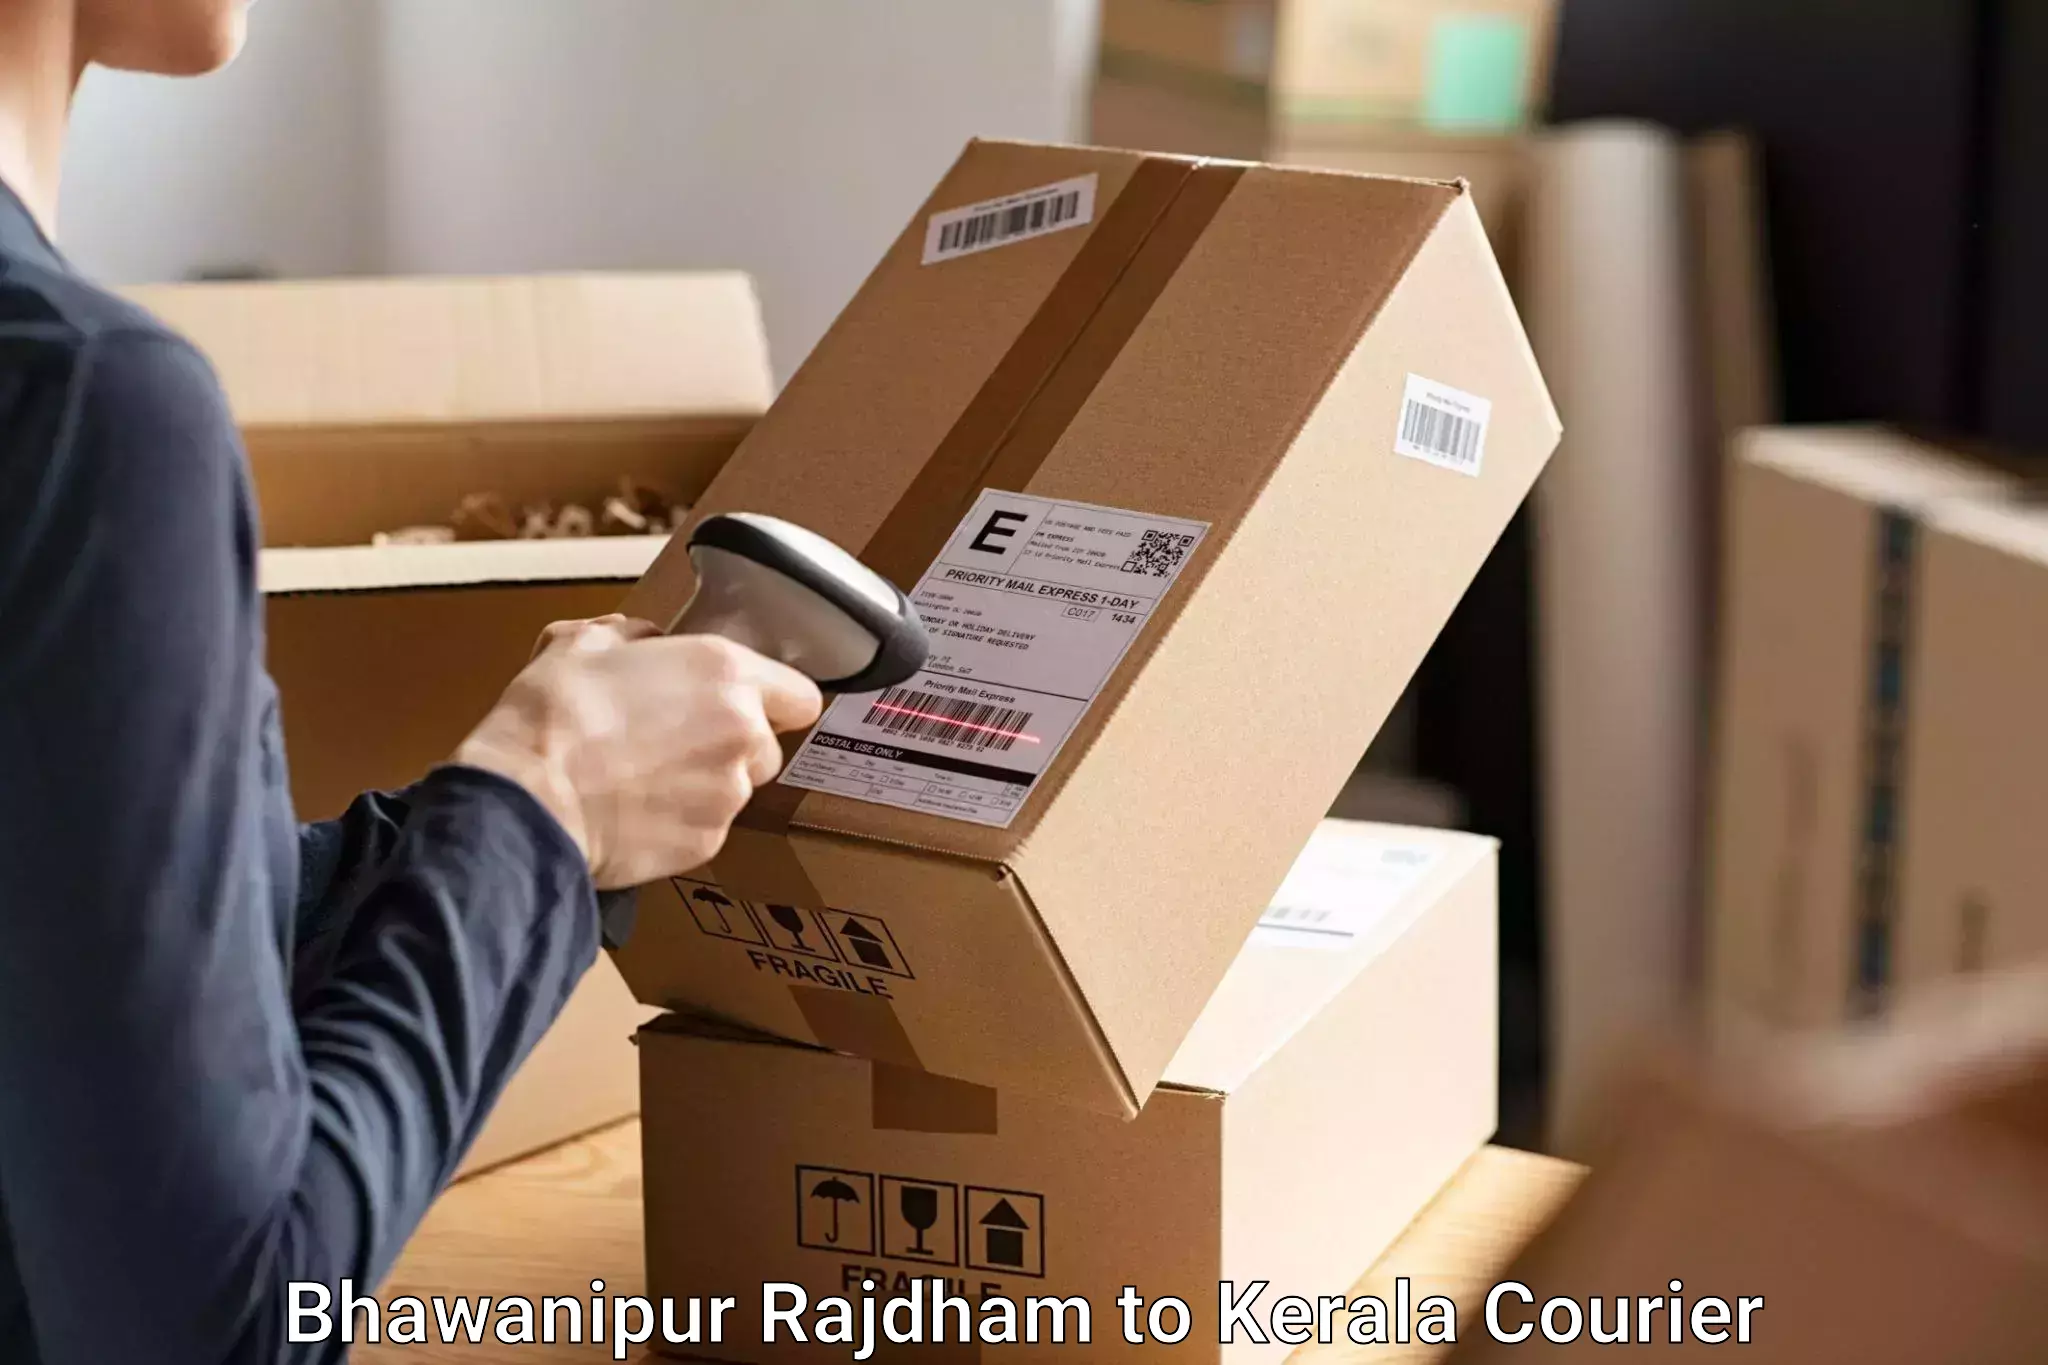 Luggage delivery system Bhawanipur Rajdham to Kottayam